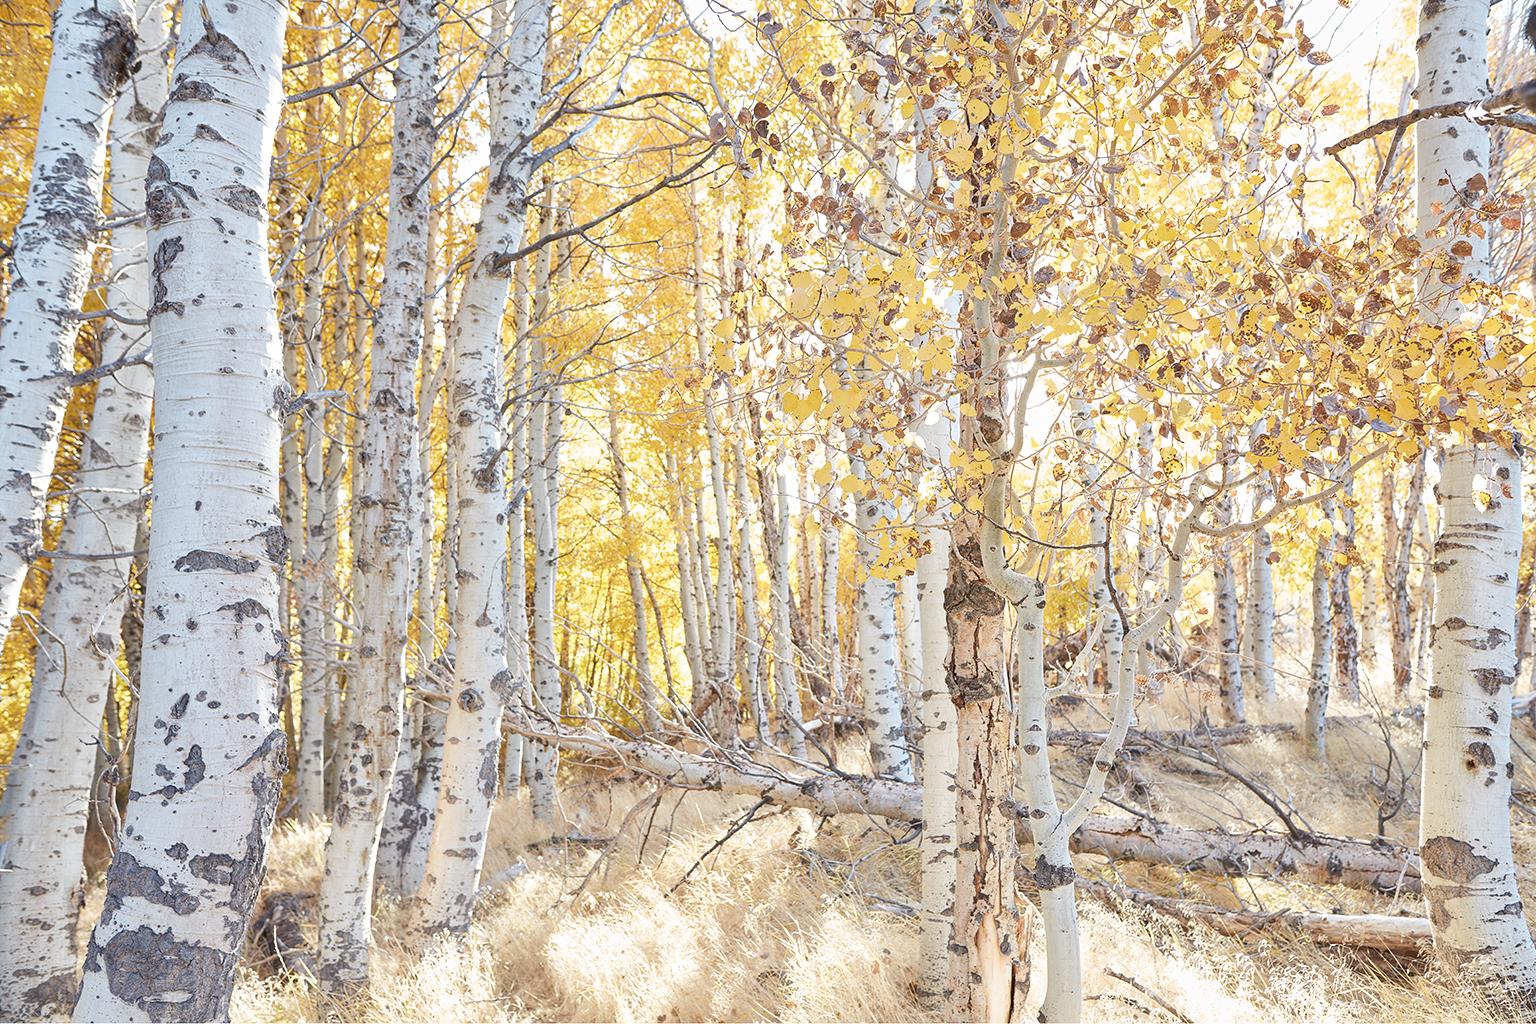 Frank Schott Landscape Print - Aspen Study I - large scale photograph of Indian summer autumnal color palette